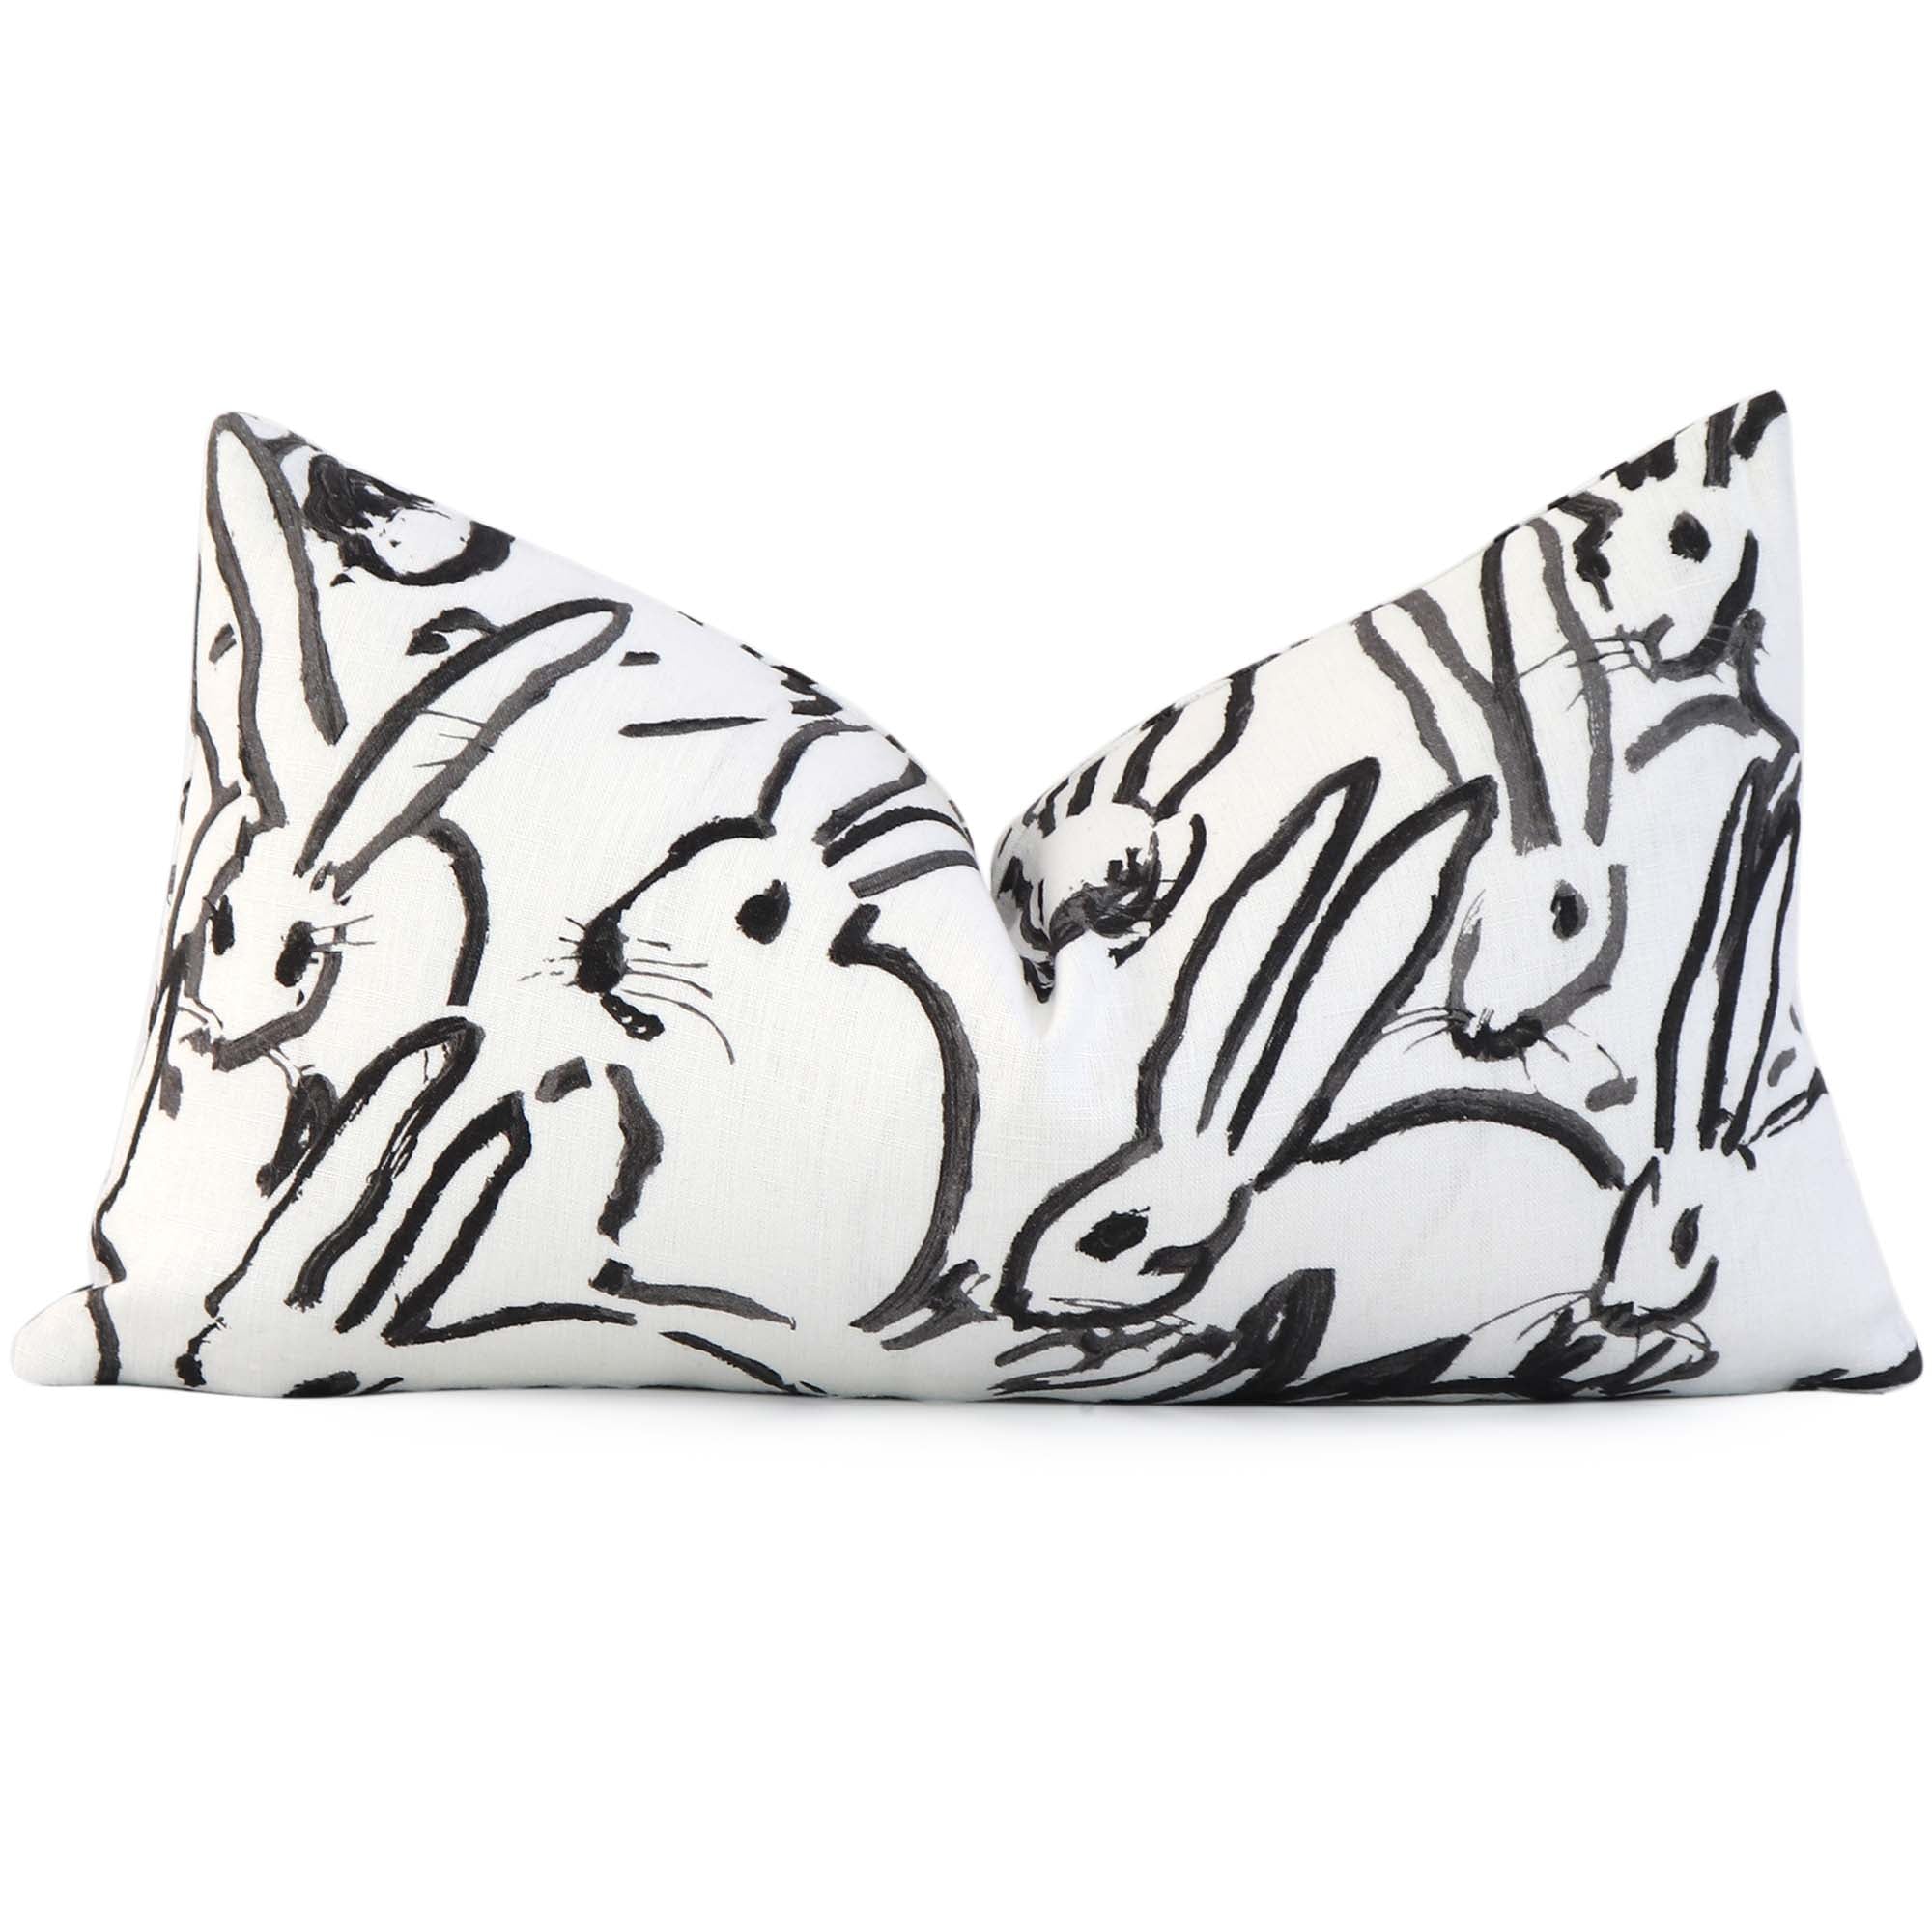 Lee Jofa Hutch Black and White Bunny Designer Luxury Lumbar Throw Pillow Cover